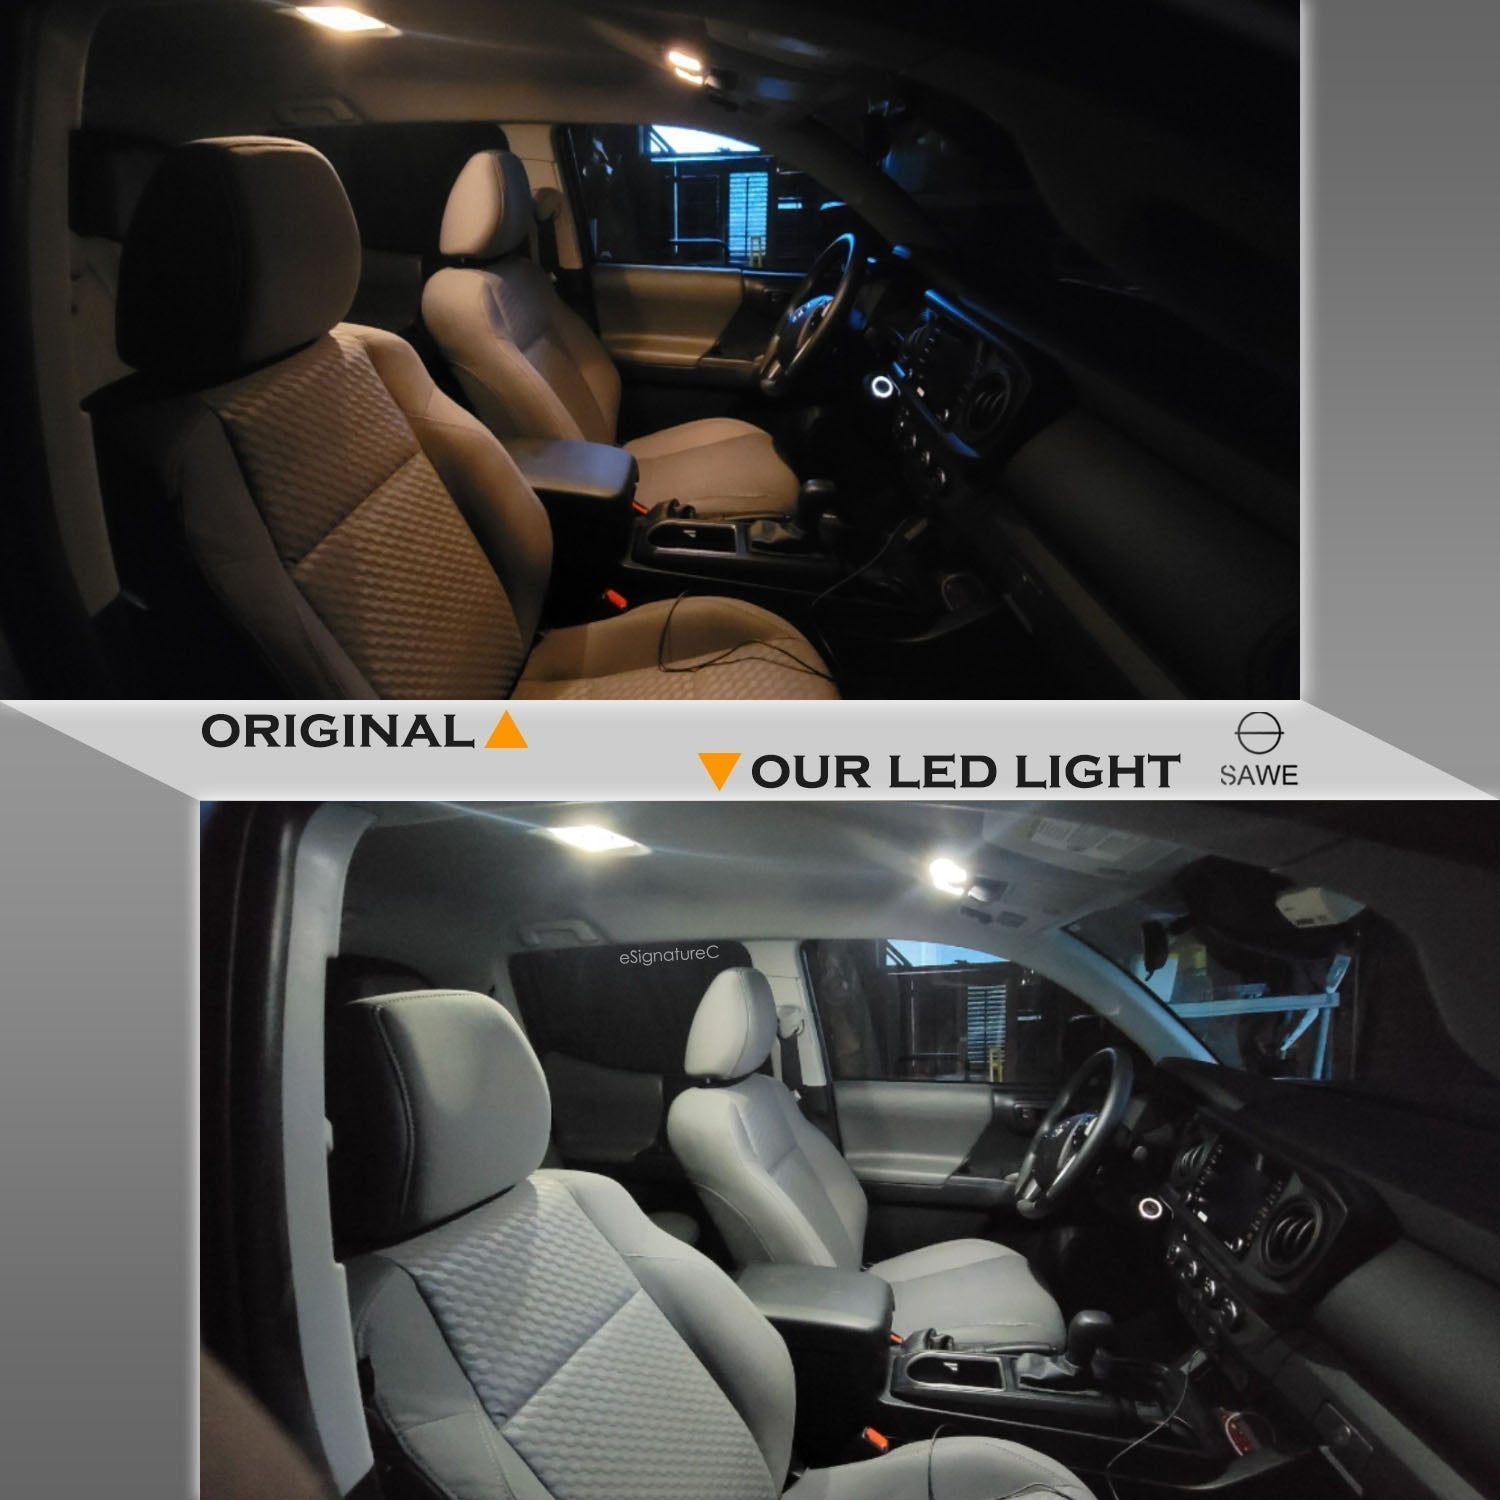 For Lexus GX460 Interior LED Lights - Dome & Map Light Bulbs Package Kit for 2010 - 2019 - White